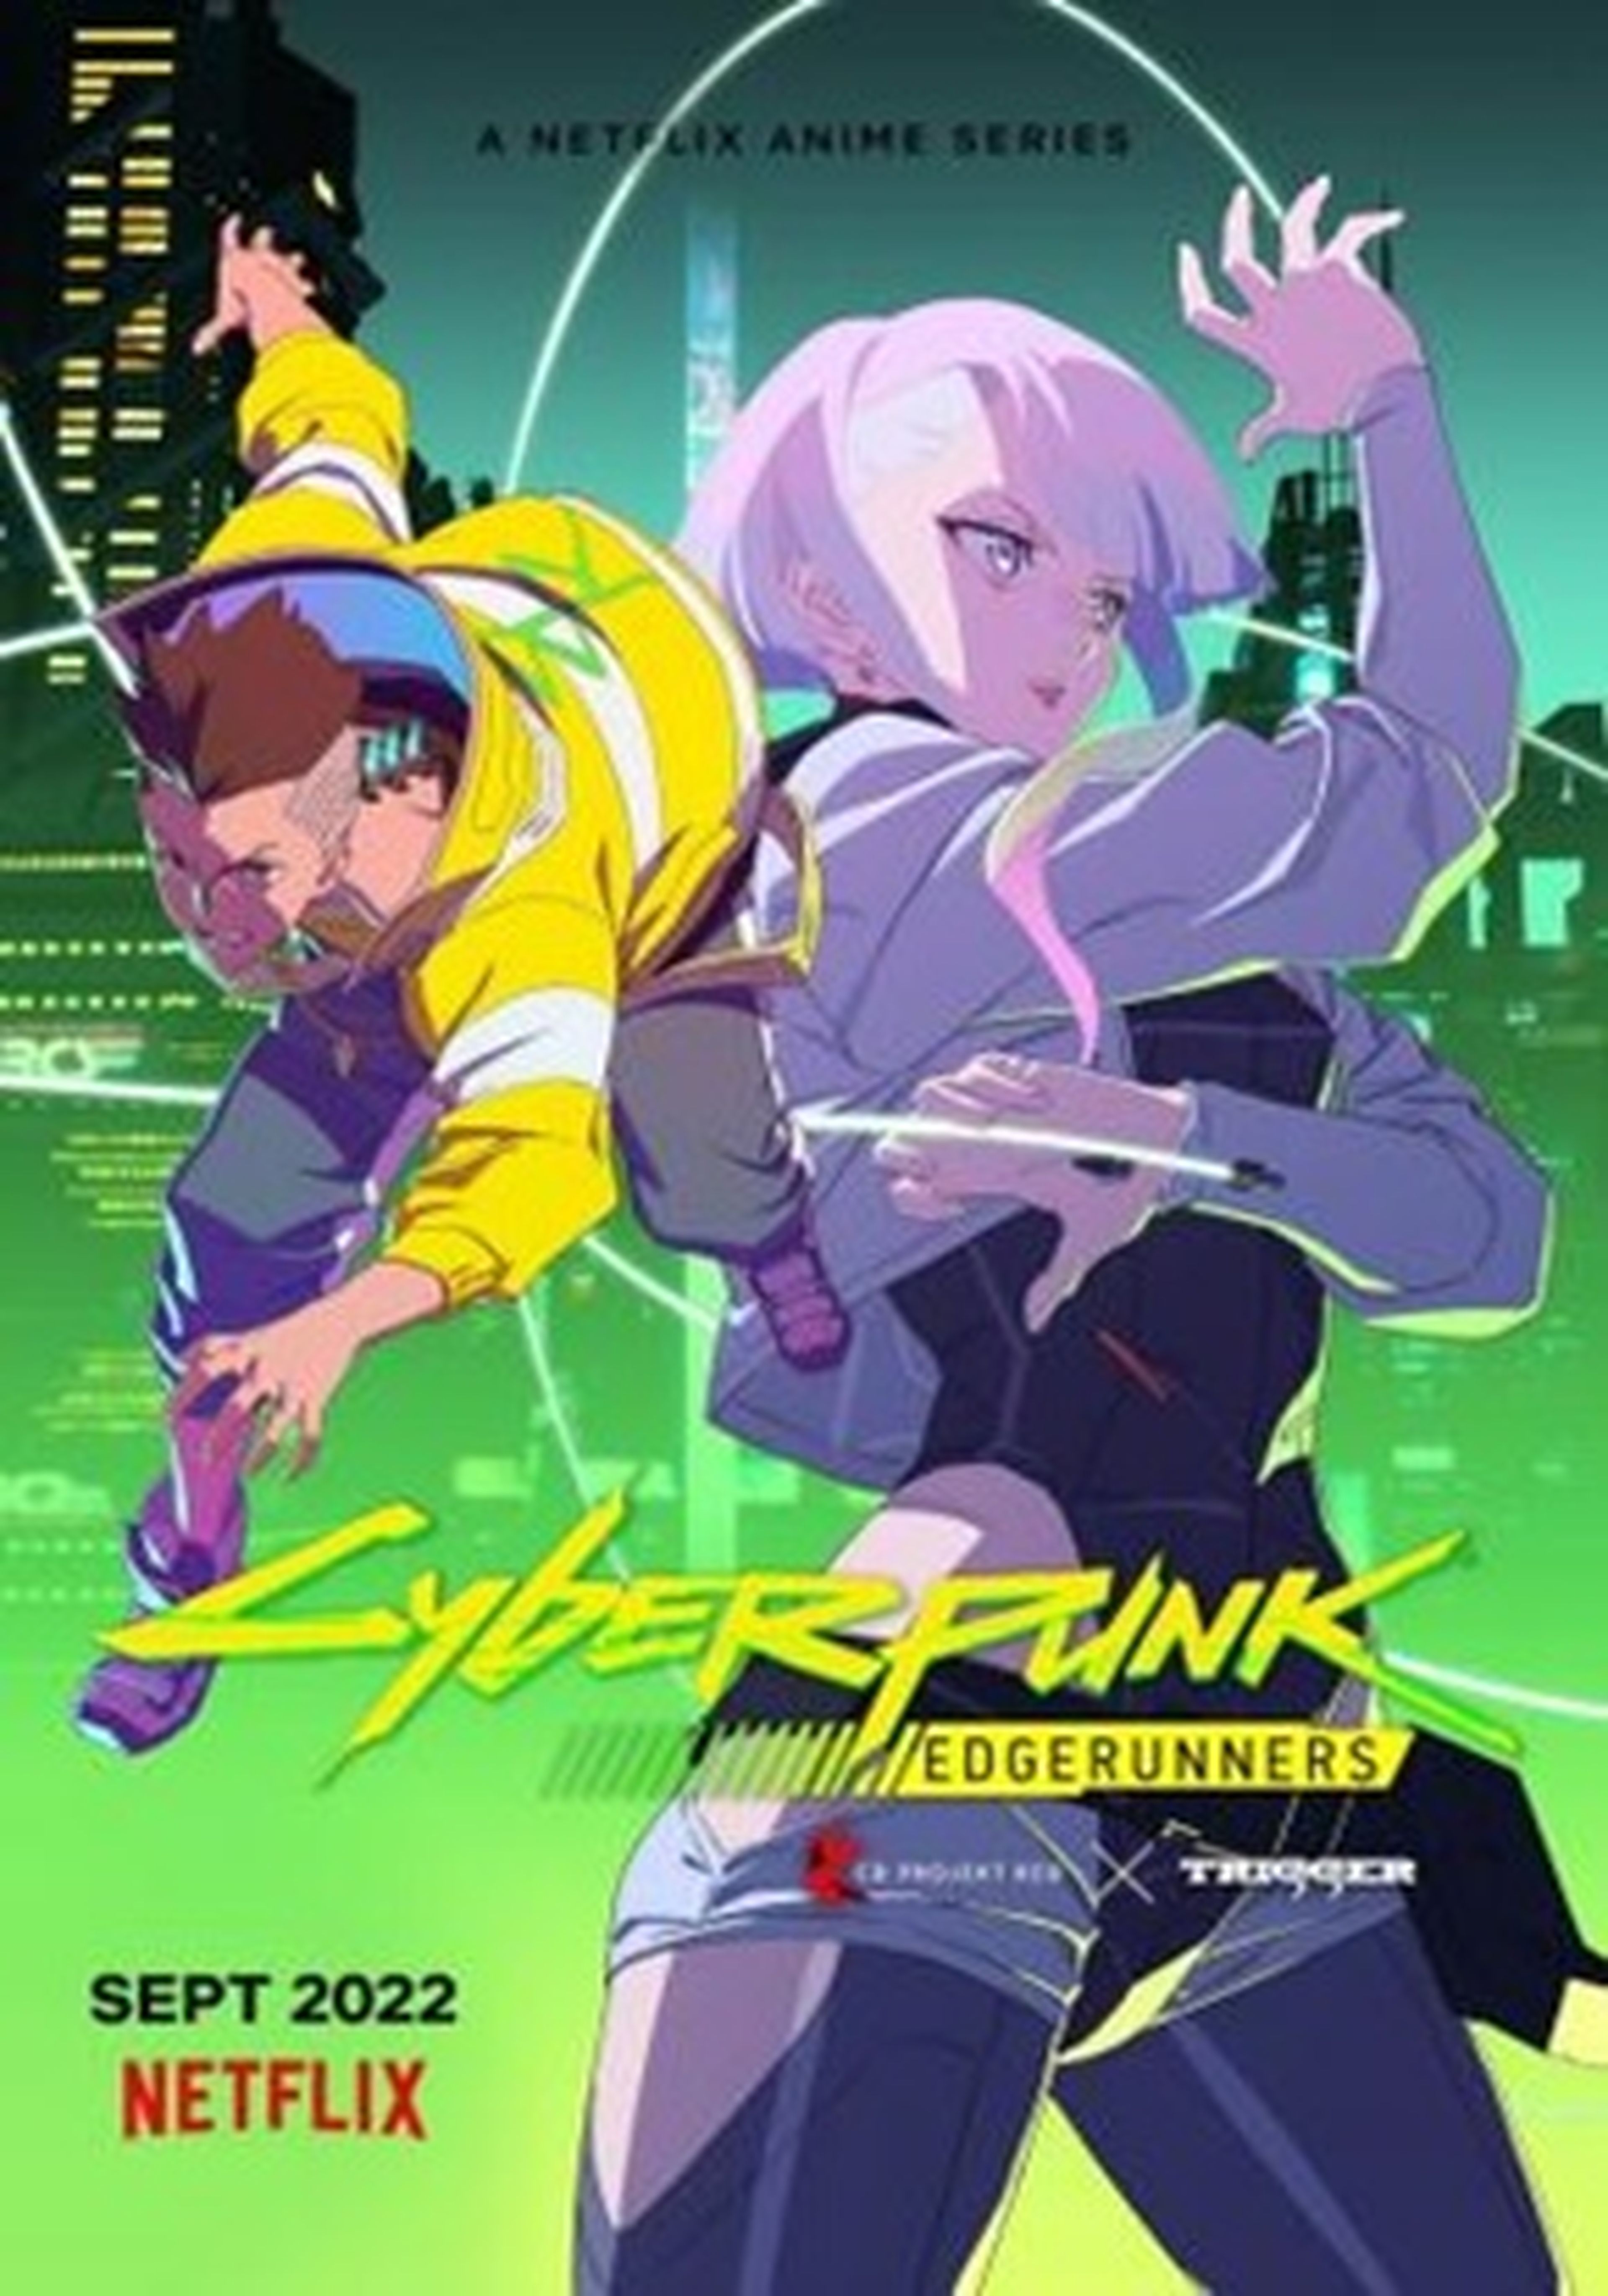 Anime Cyberpunk Edgerunners, ¿habrá Temporada 2? - Meristation